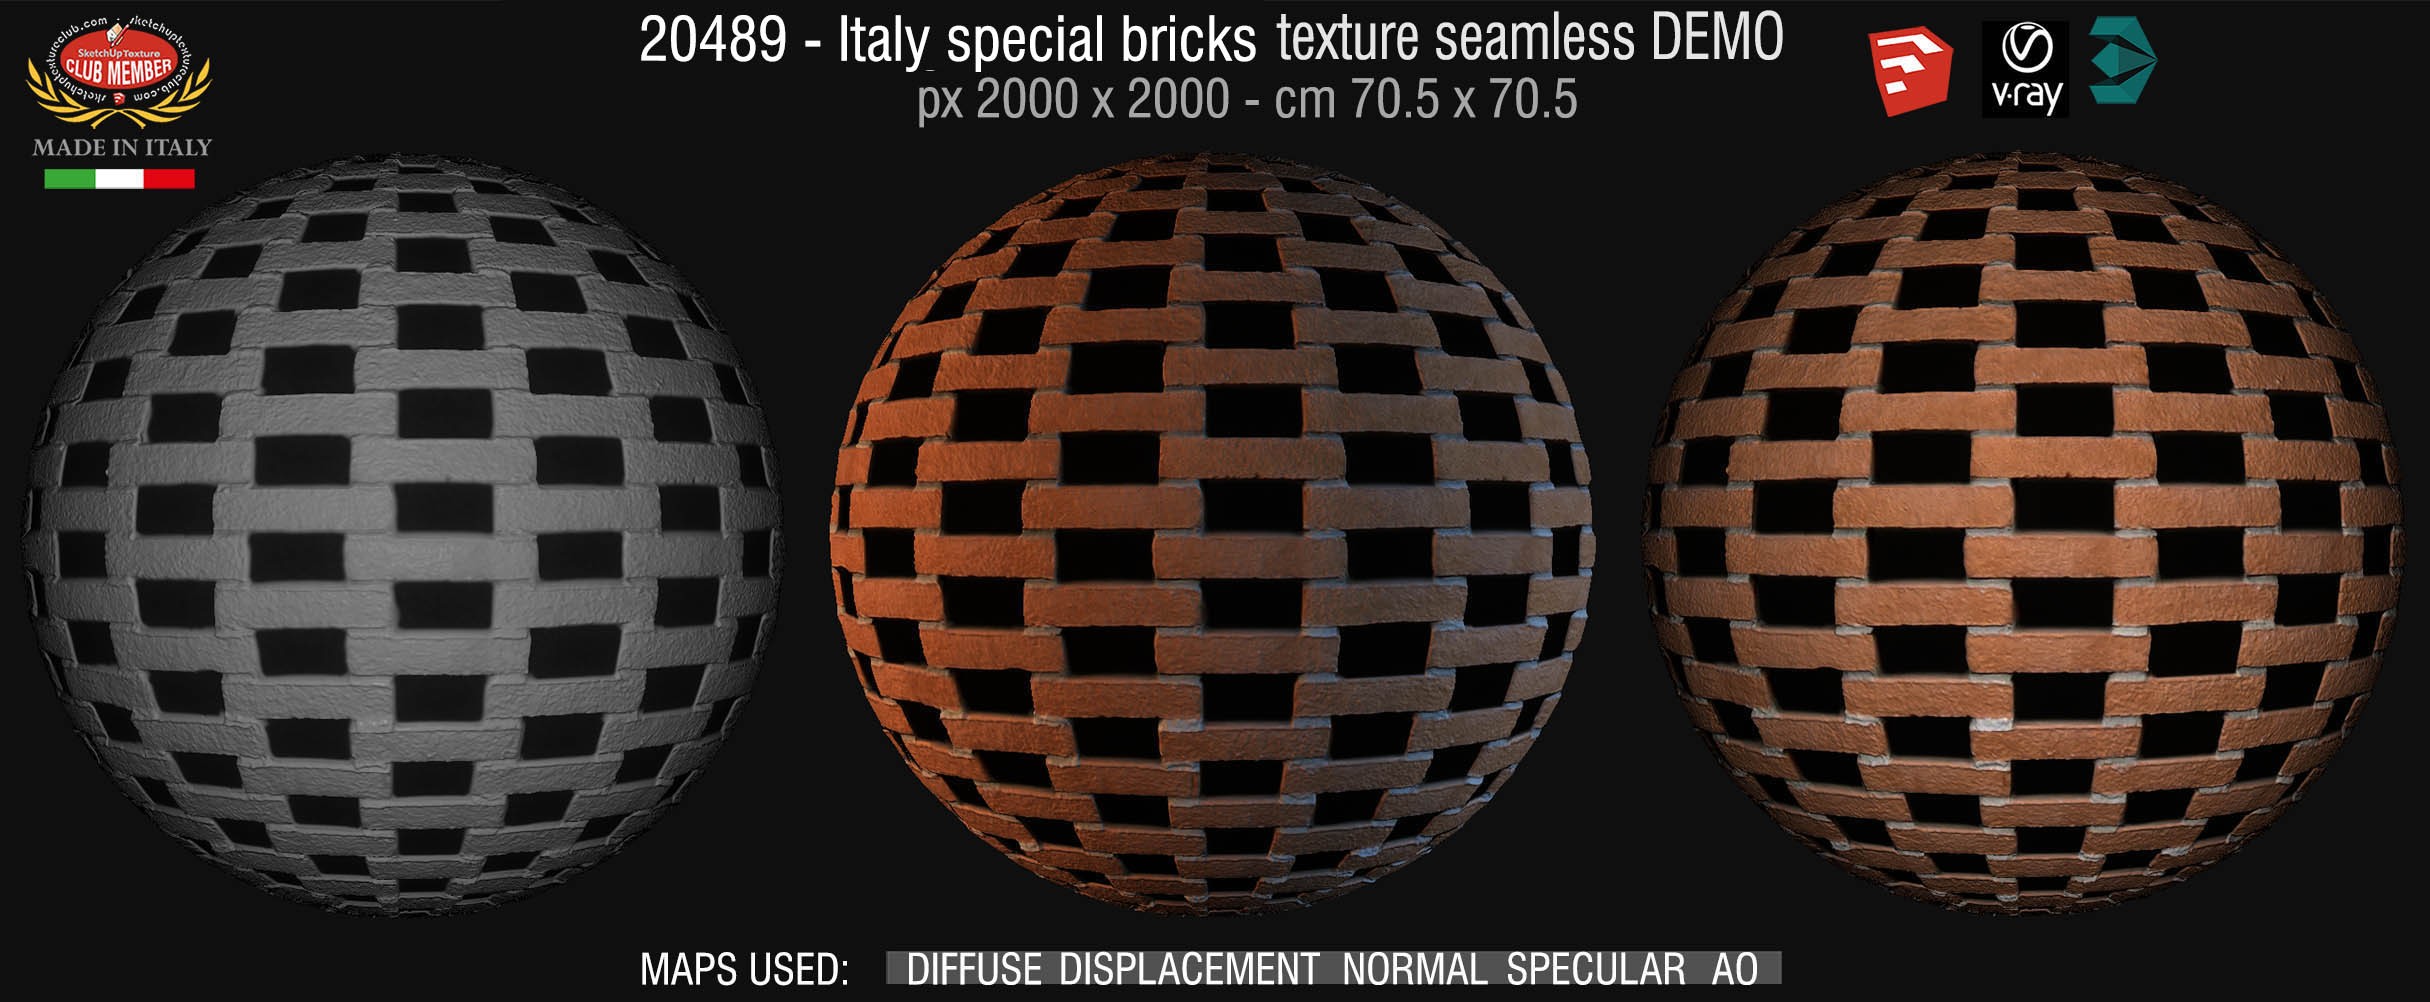 20489 Italy special bricks texture seamless + maps DEMO